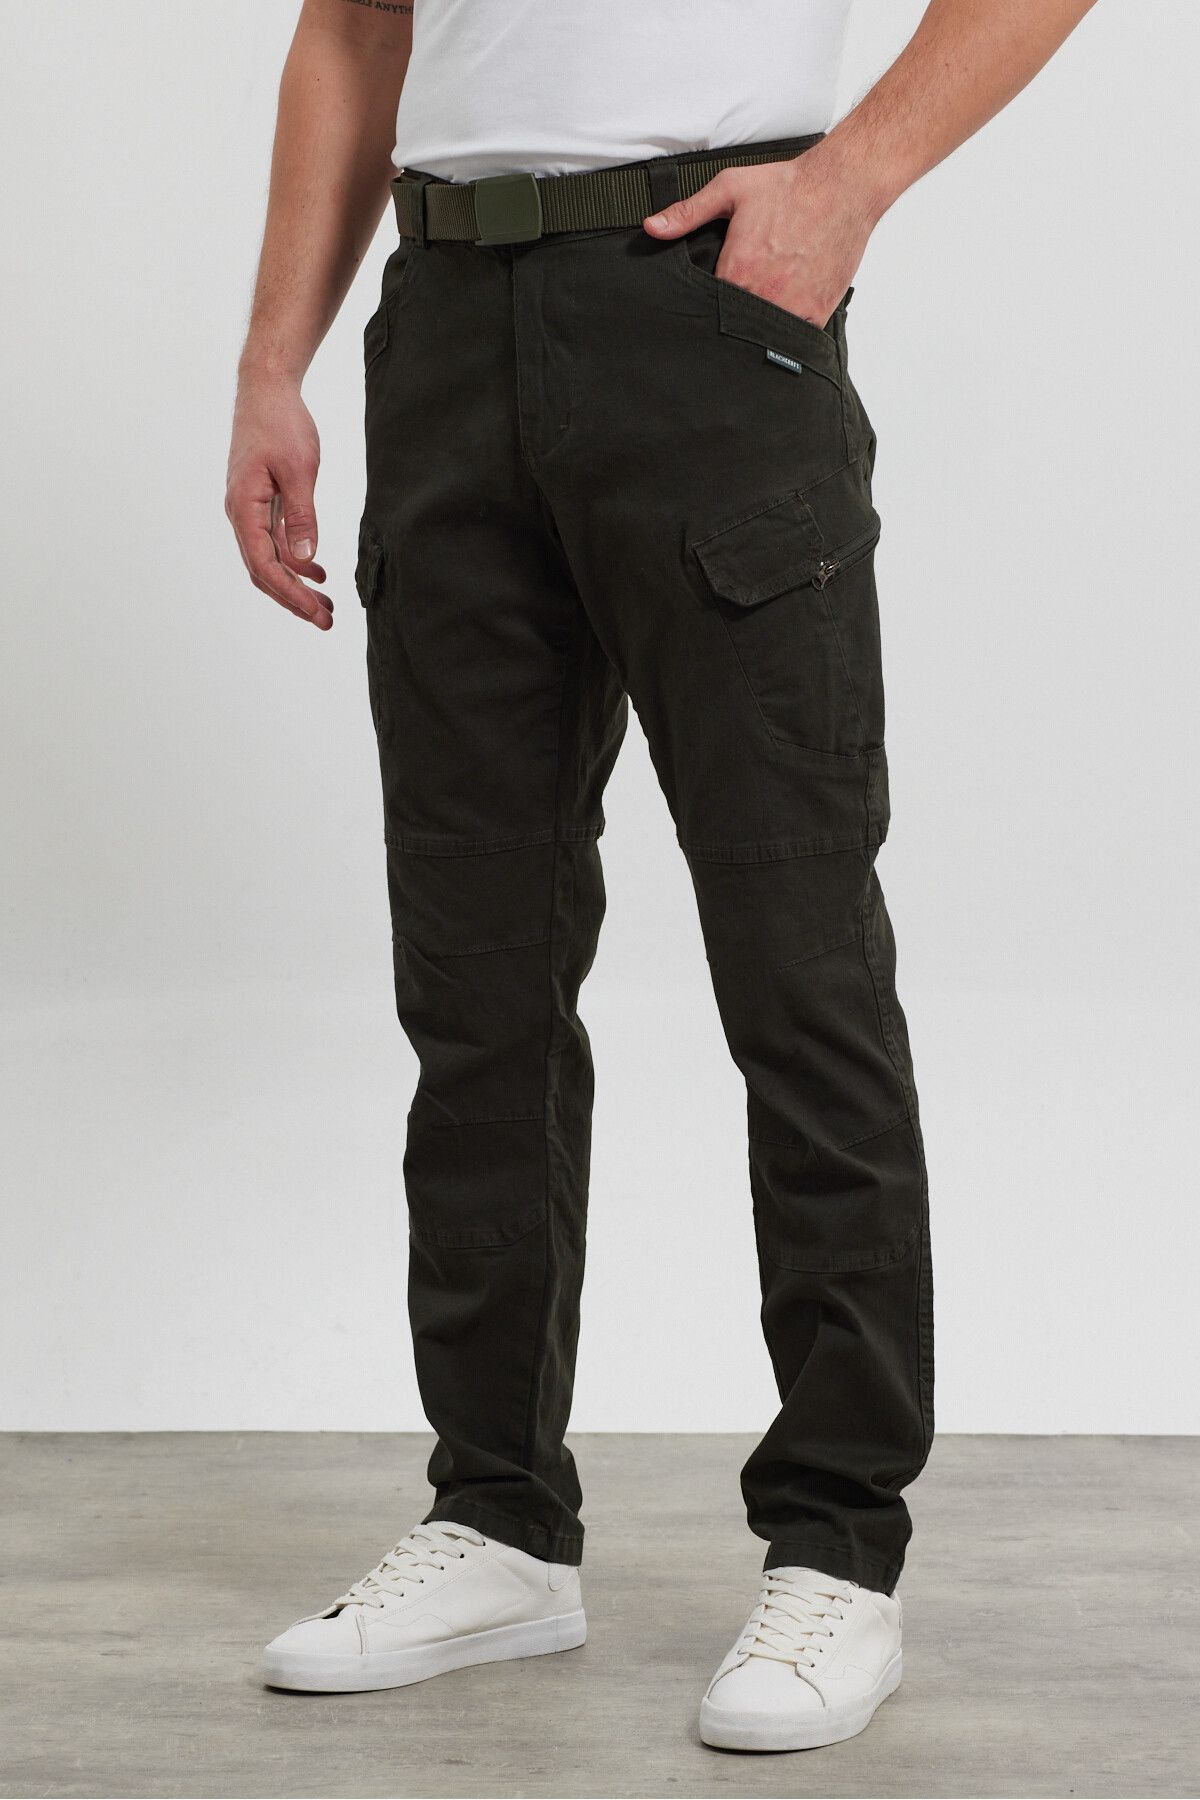 2five Erkek Rahat Kesim Pamuklu Haki Yeşil Renk Tactical Taktik Kargo Pantolon TAKTİK